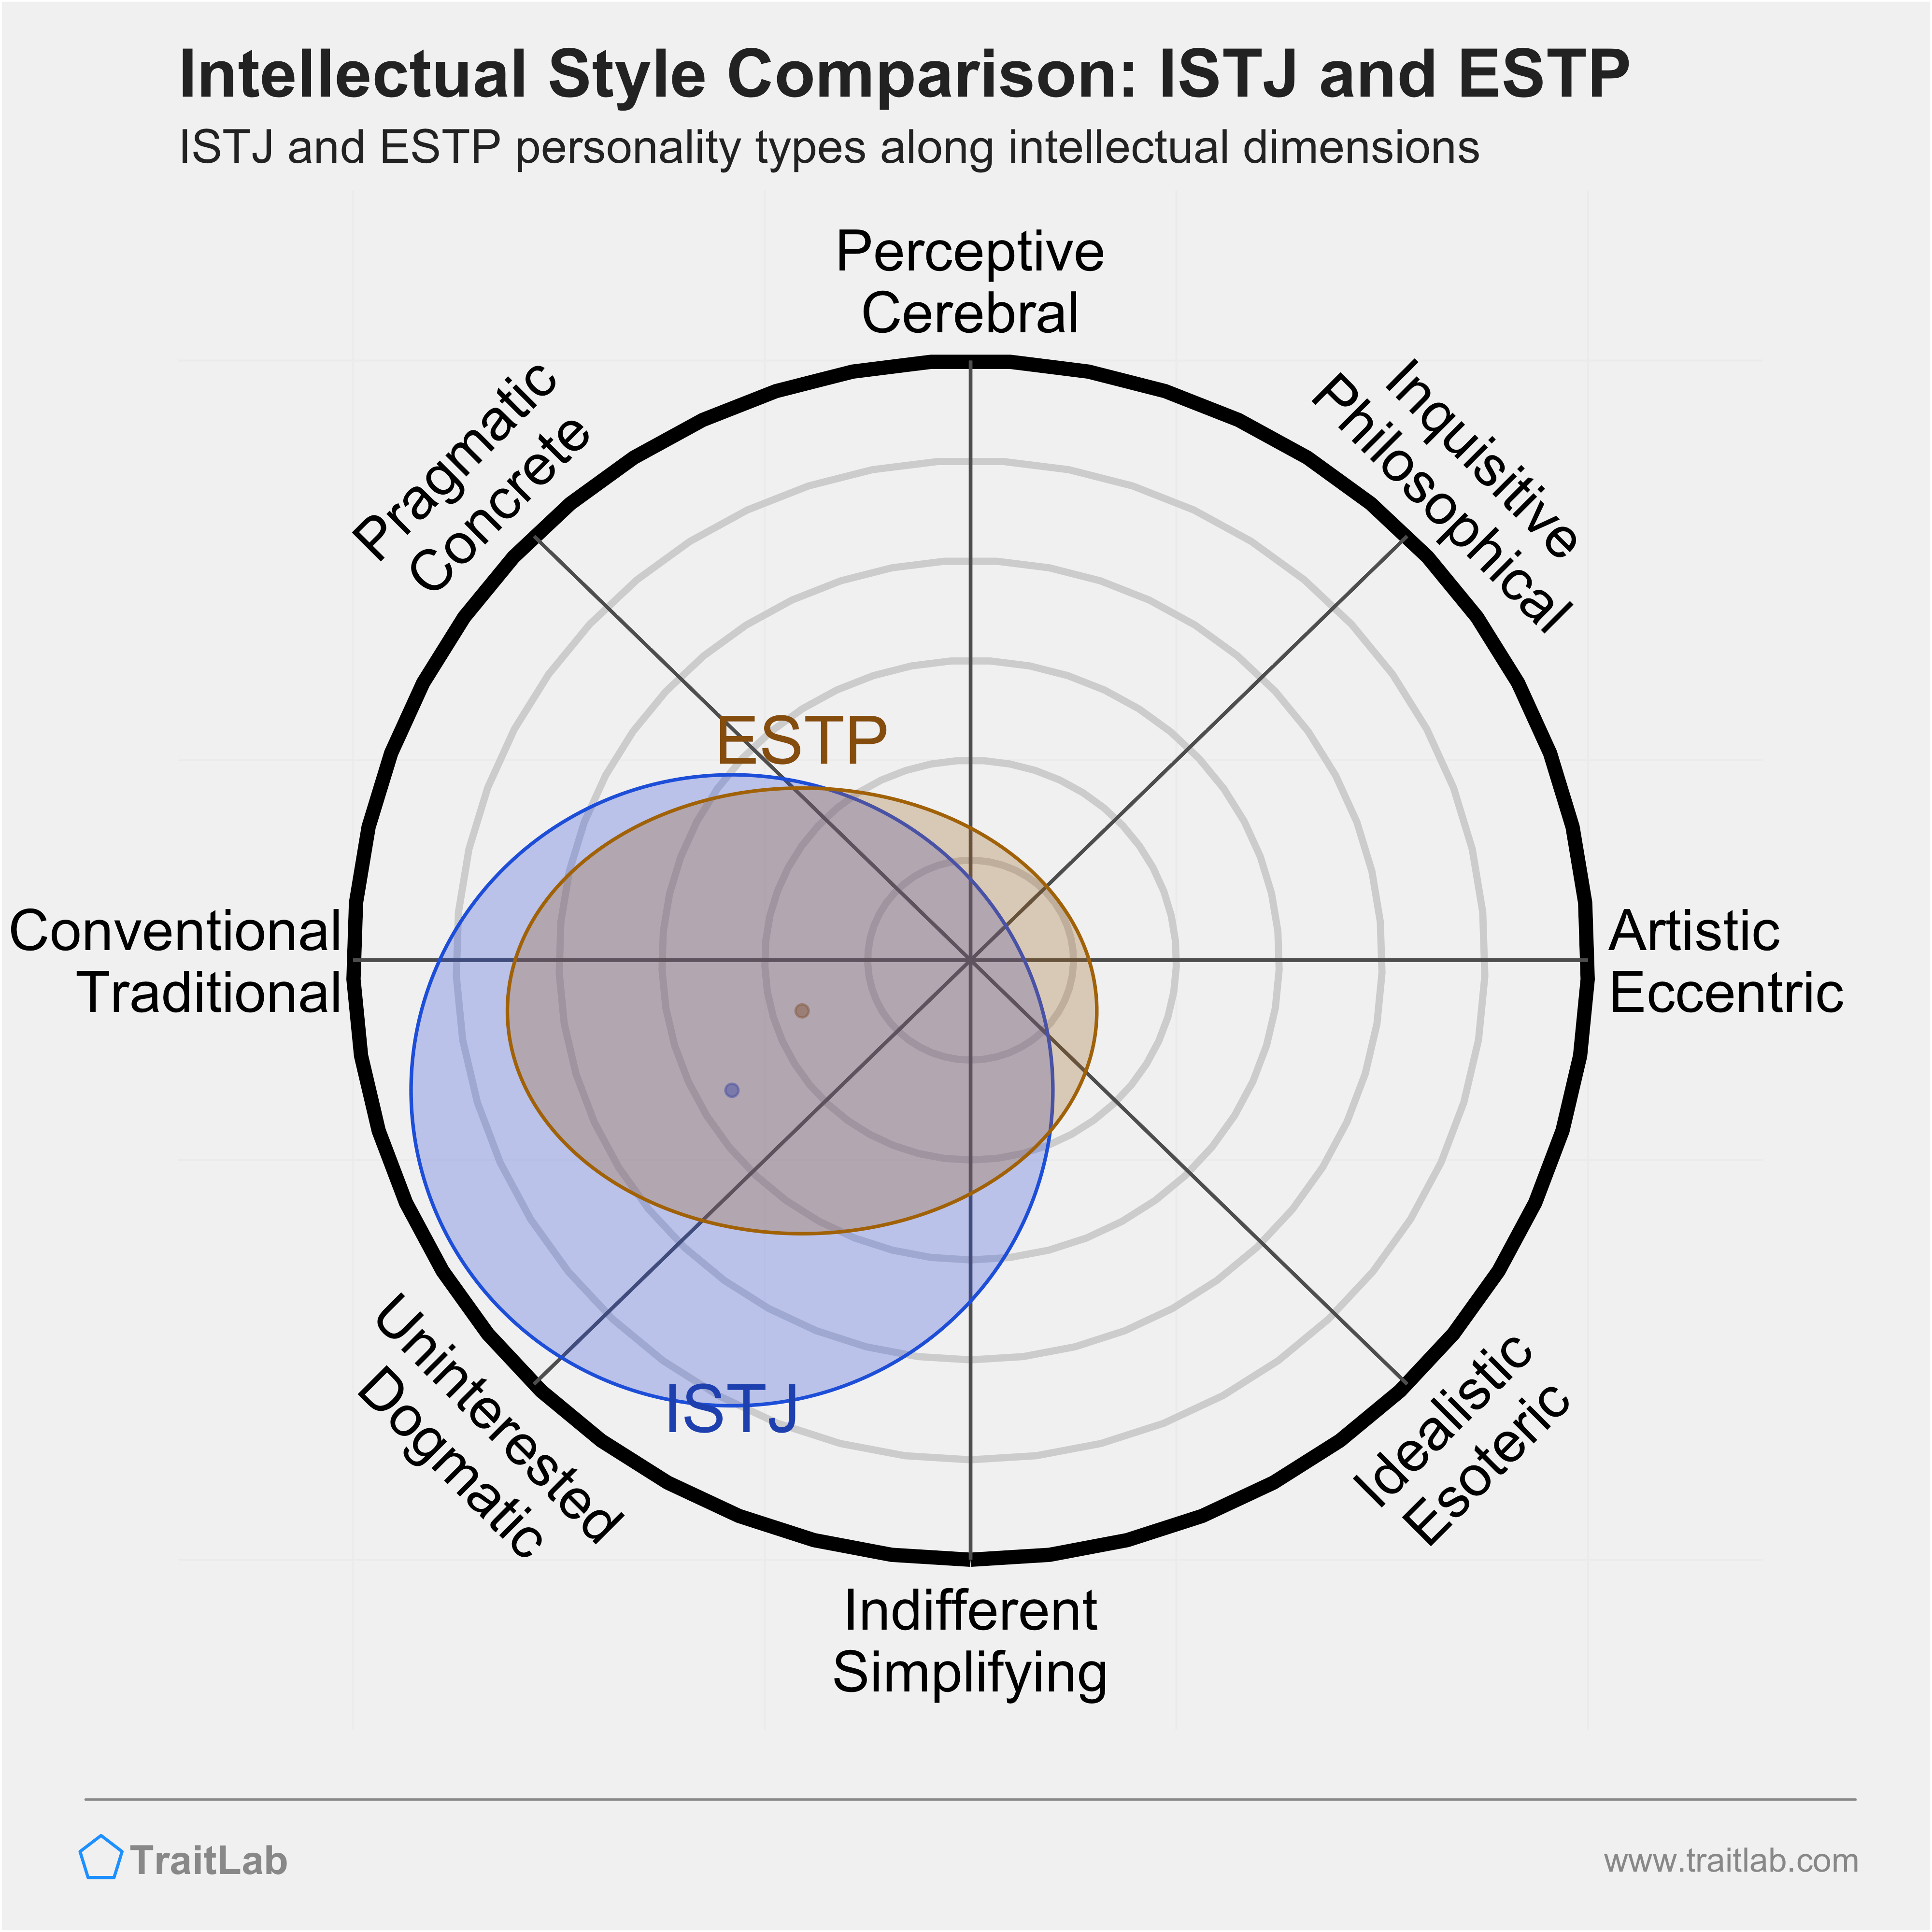 ISTJ and ESTP comparison across intellectual dimensions